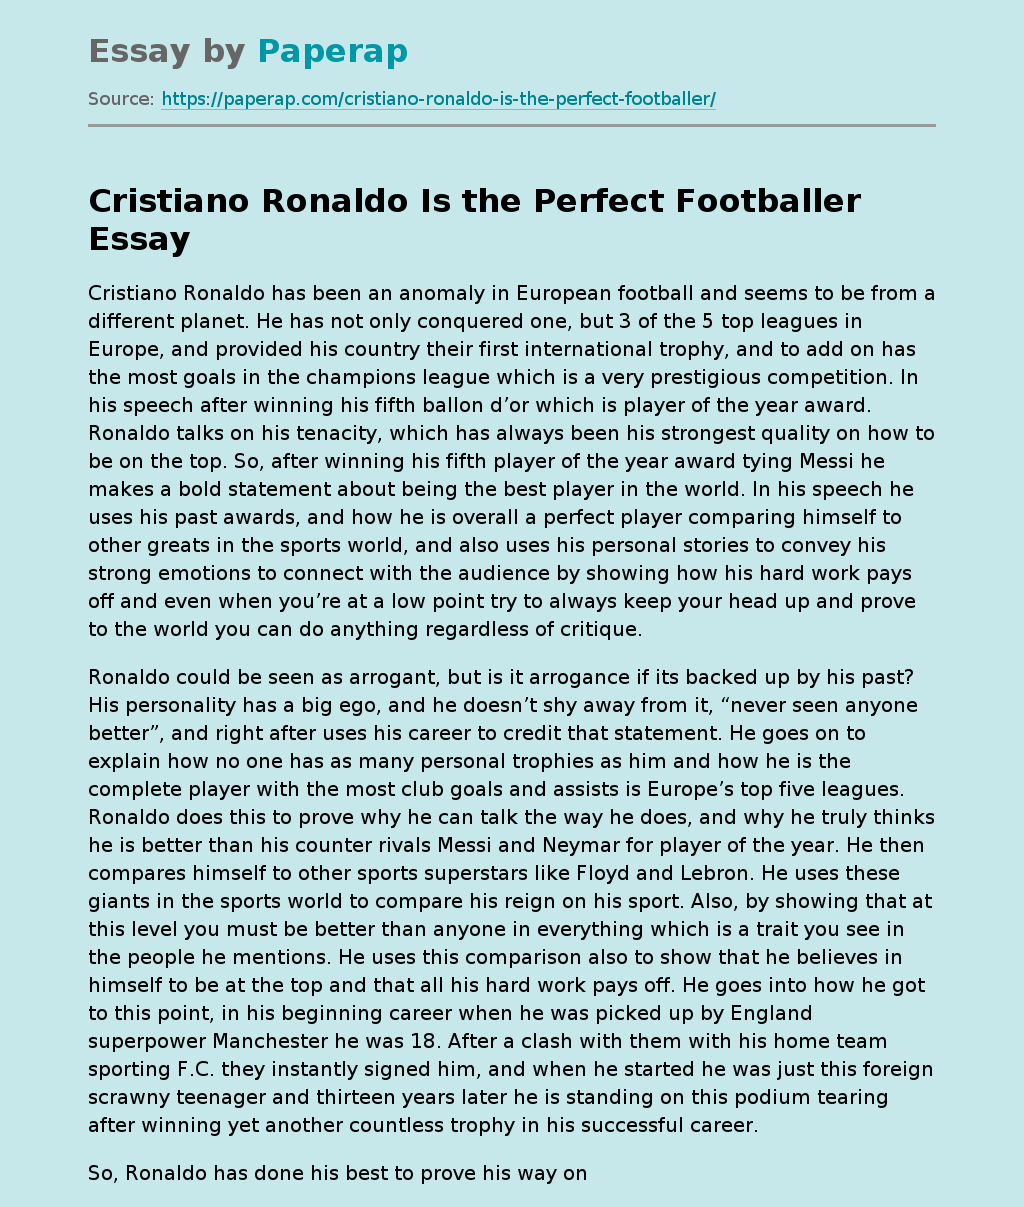 Cristiano Ronaldo Is the Perfect Footballer